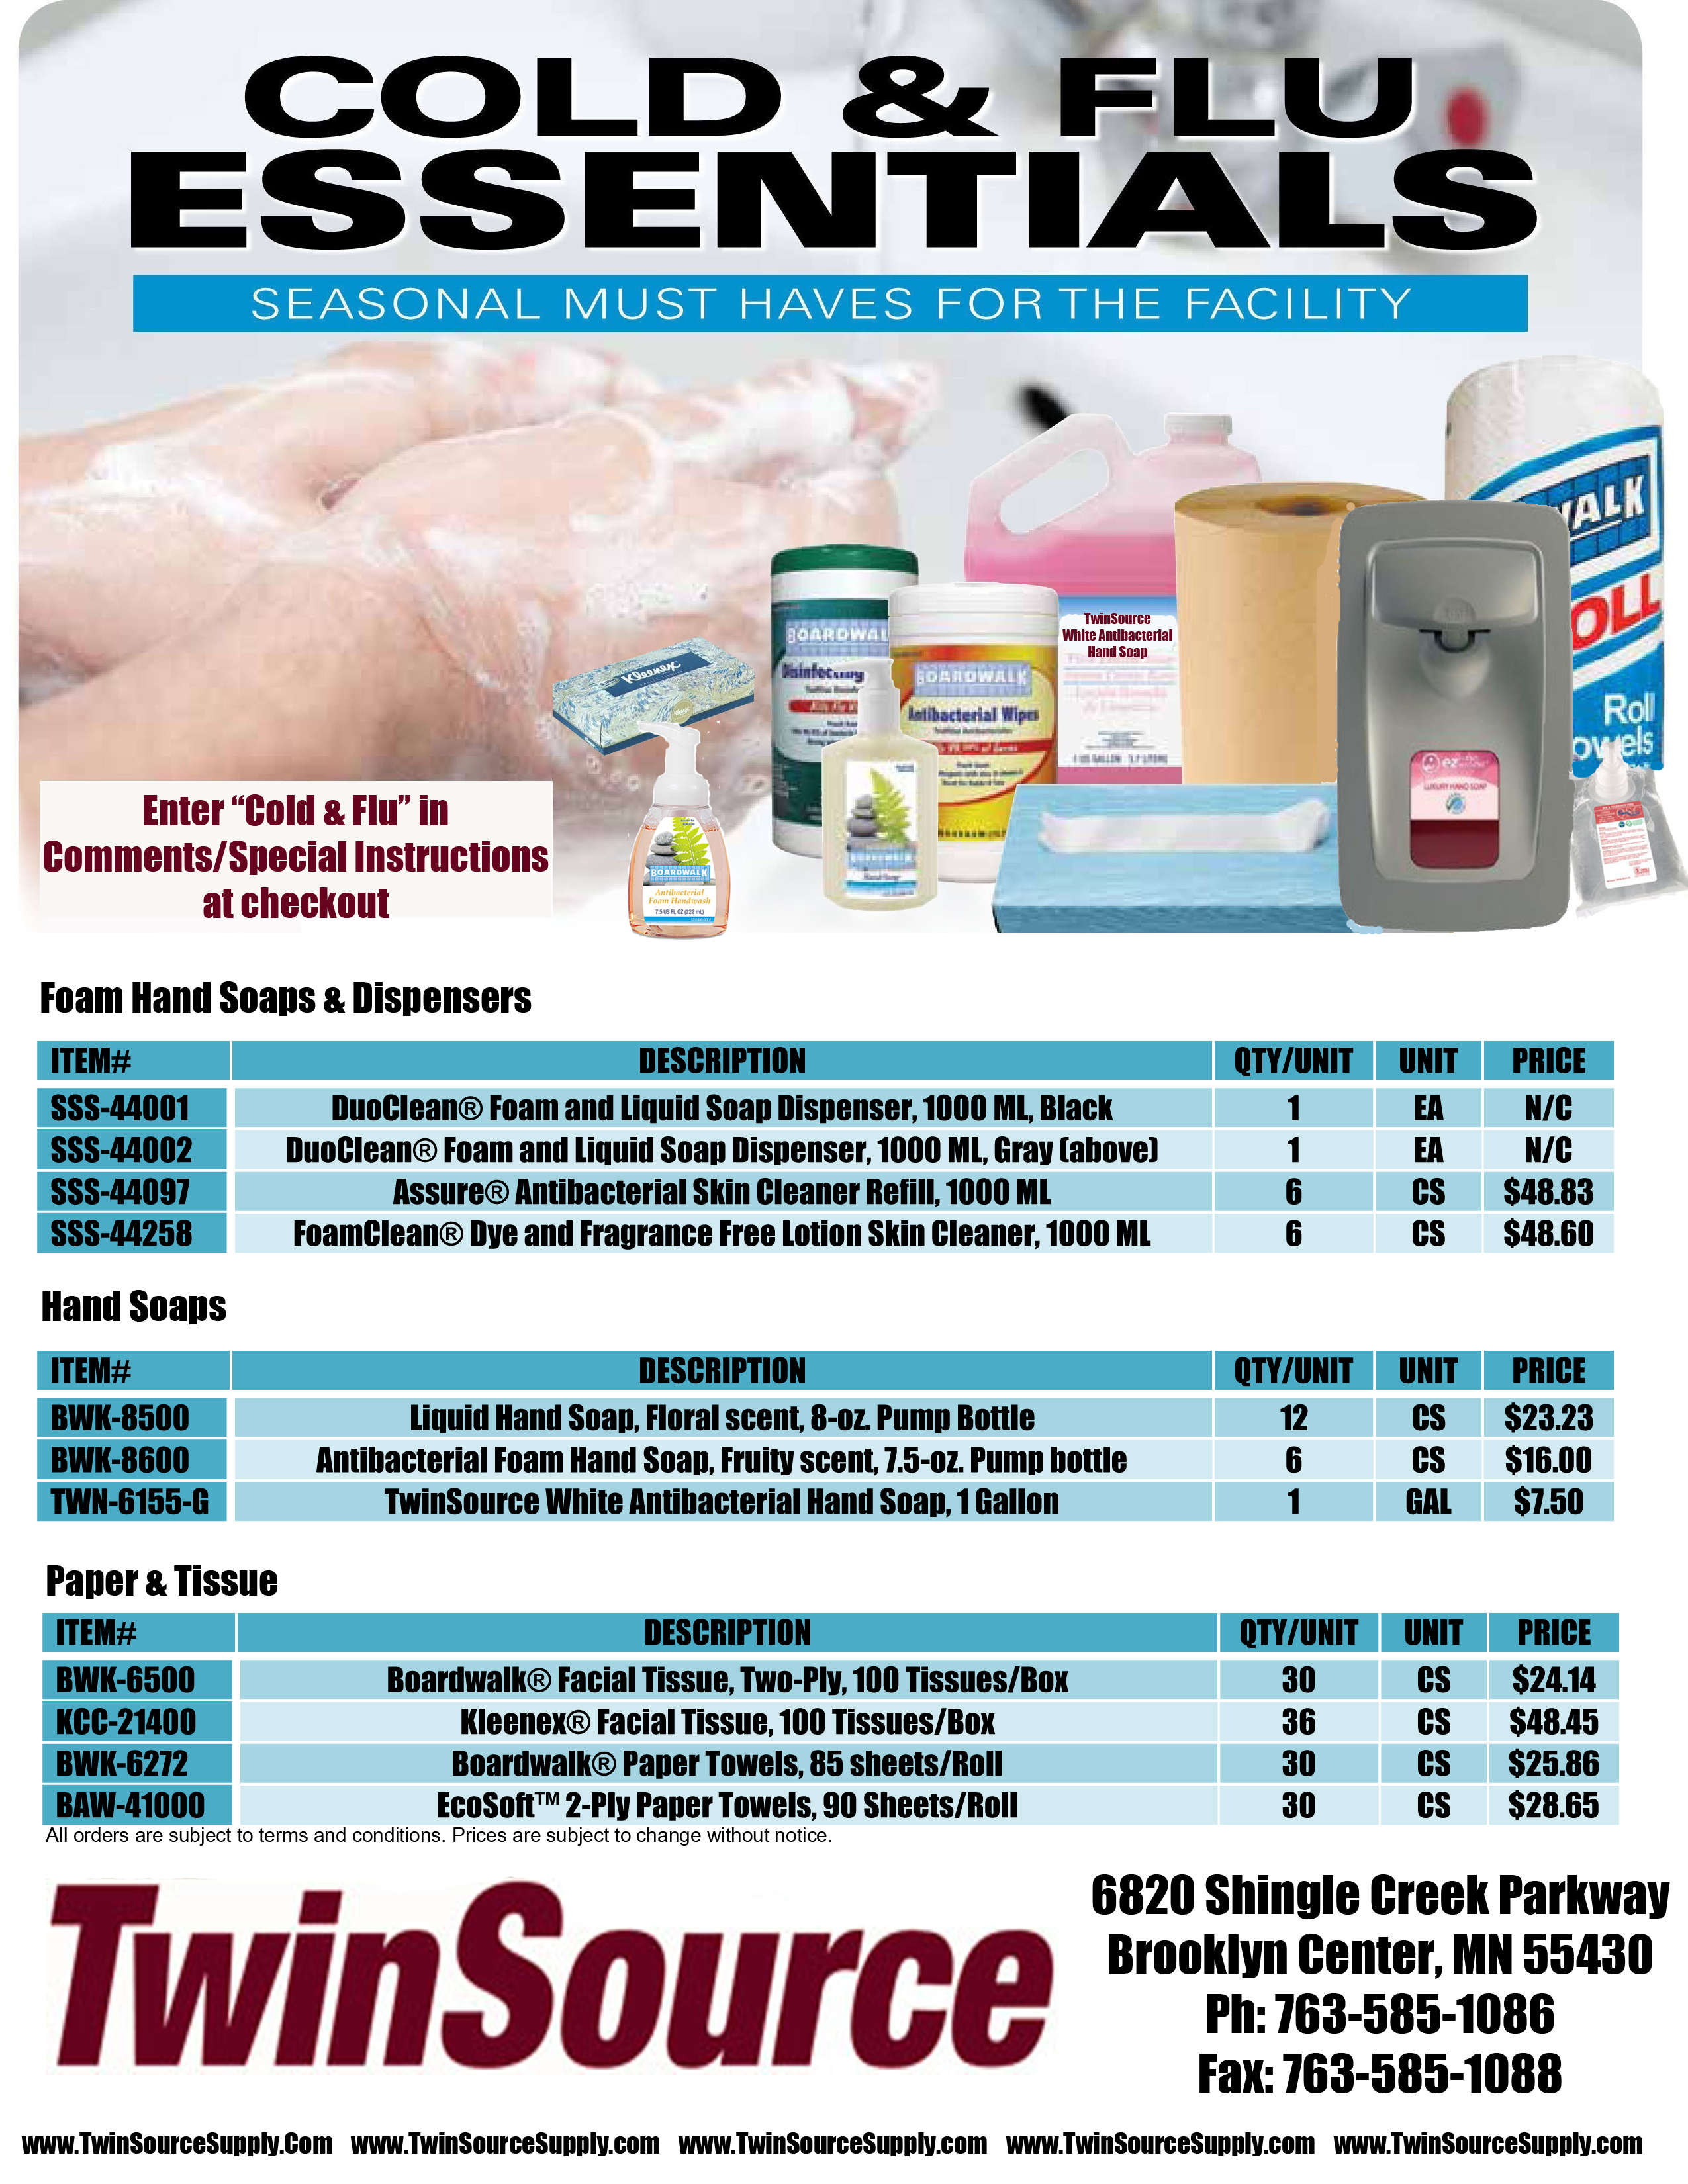 Cold_Flu Essentials 14-15 soap and paper